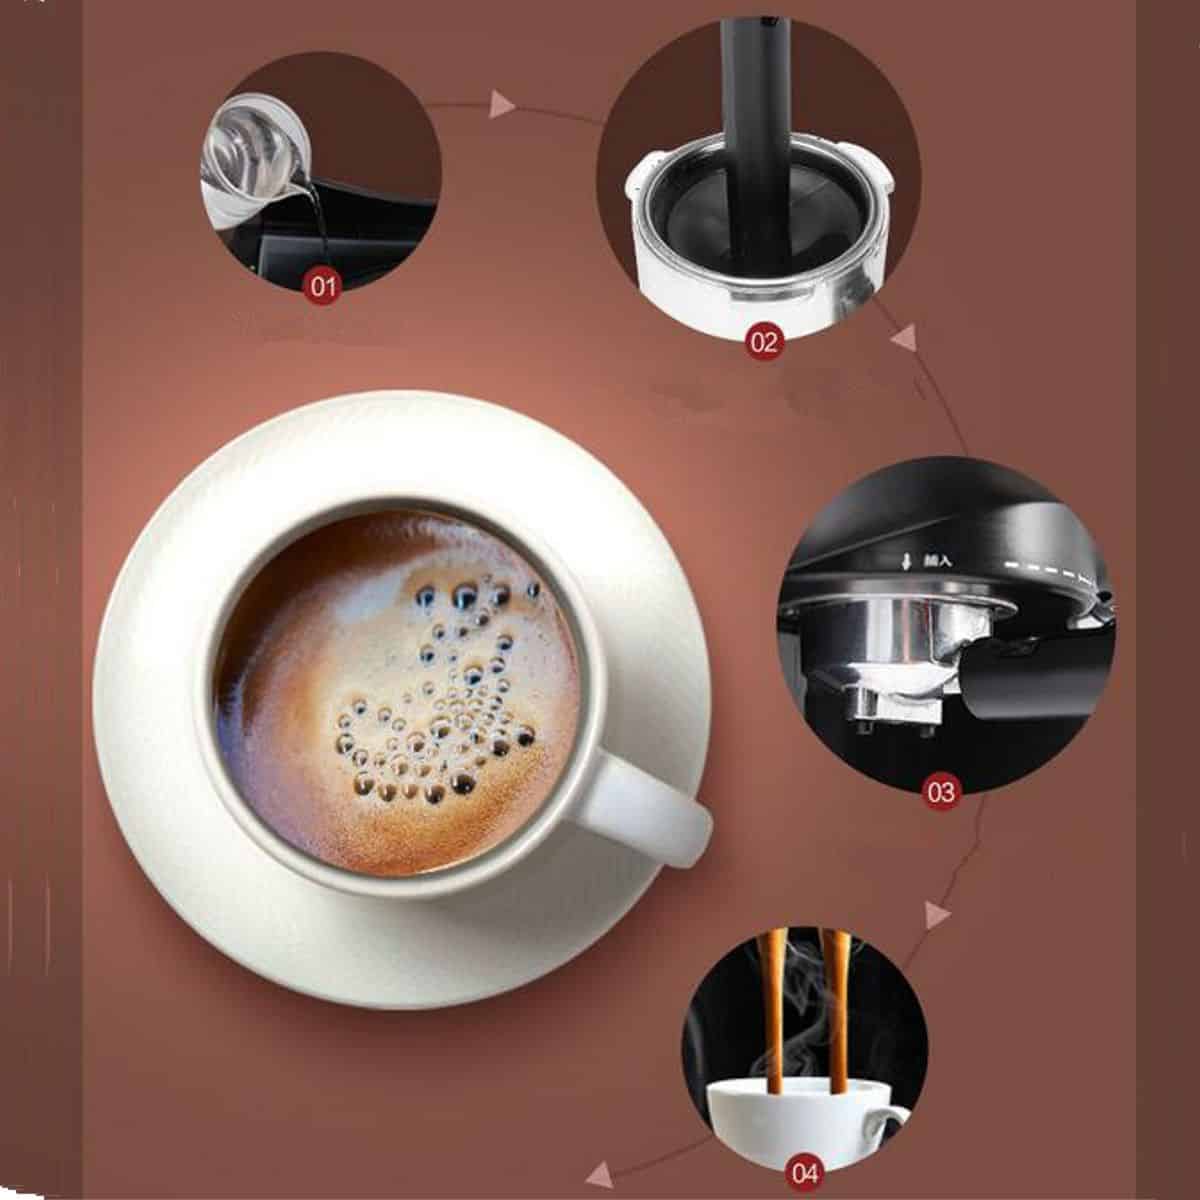 Becornec 1.5L Office Automatic Espresso Coffee Machine American Cafe Maker Coffee Pot Steam Bubble Milk Frother 20bar LCD Screen